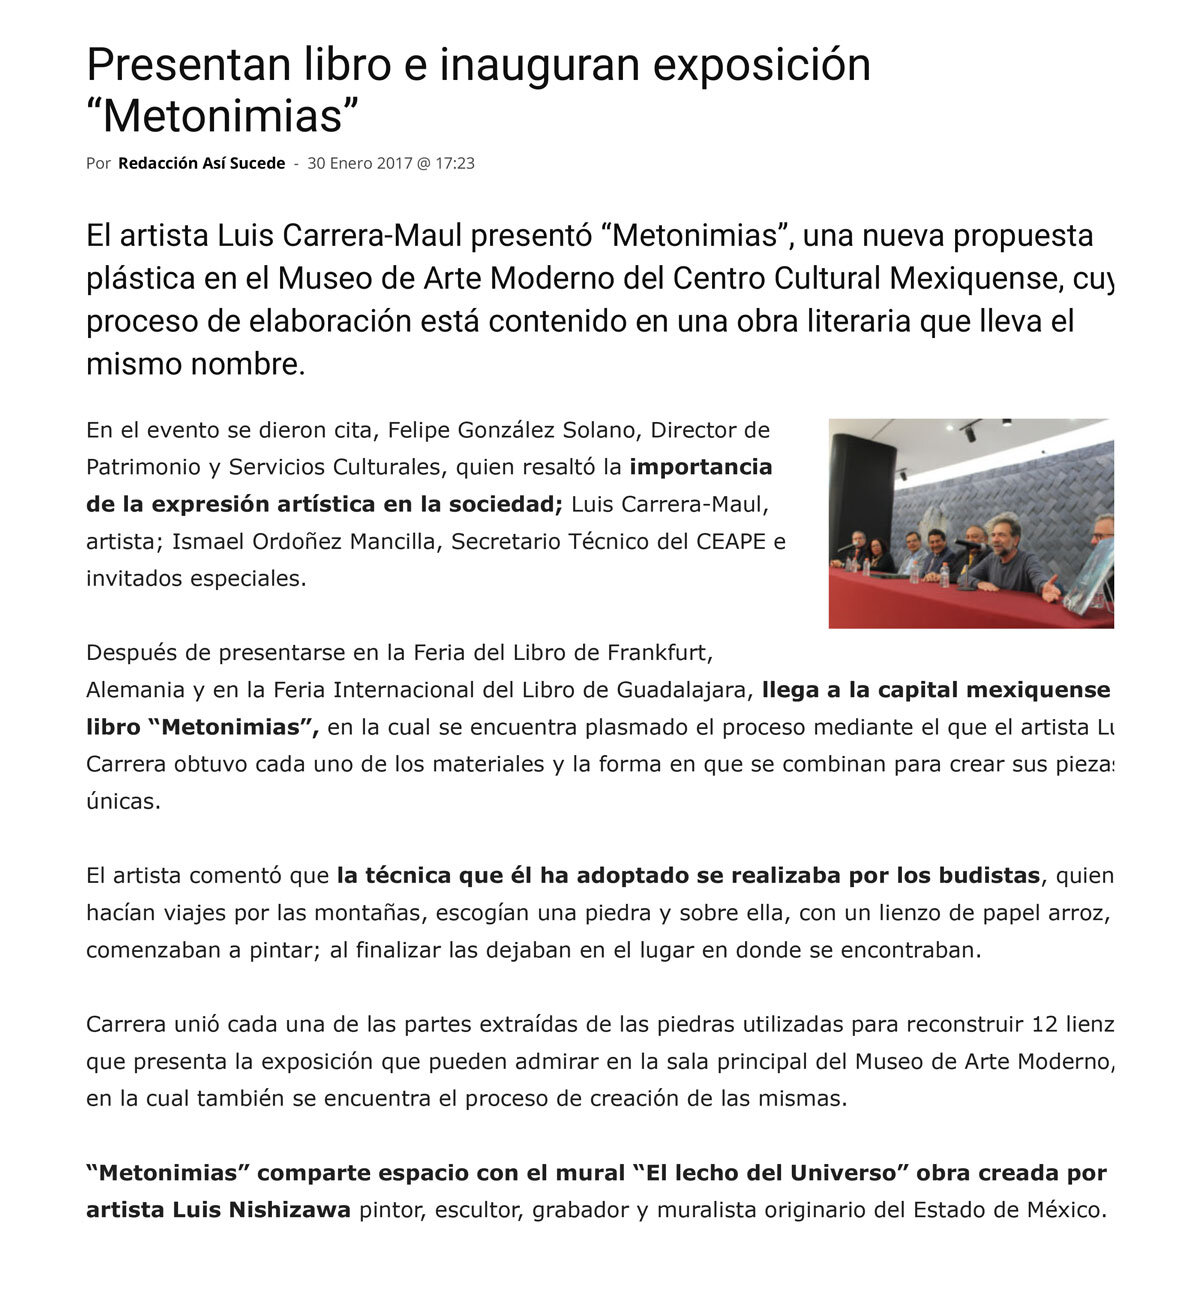 170130-Asi-Sucede-Metonimias-Exposicion-Toluca-1.jpg